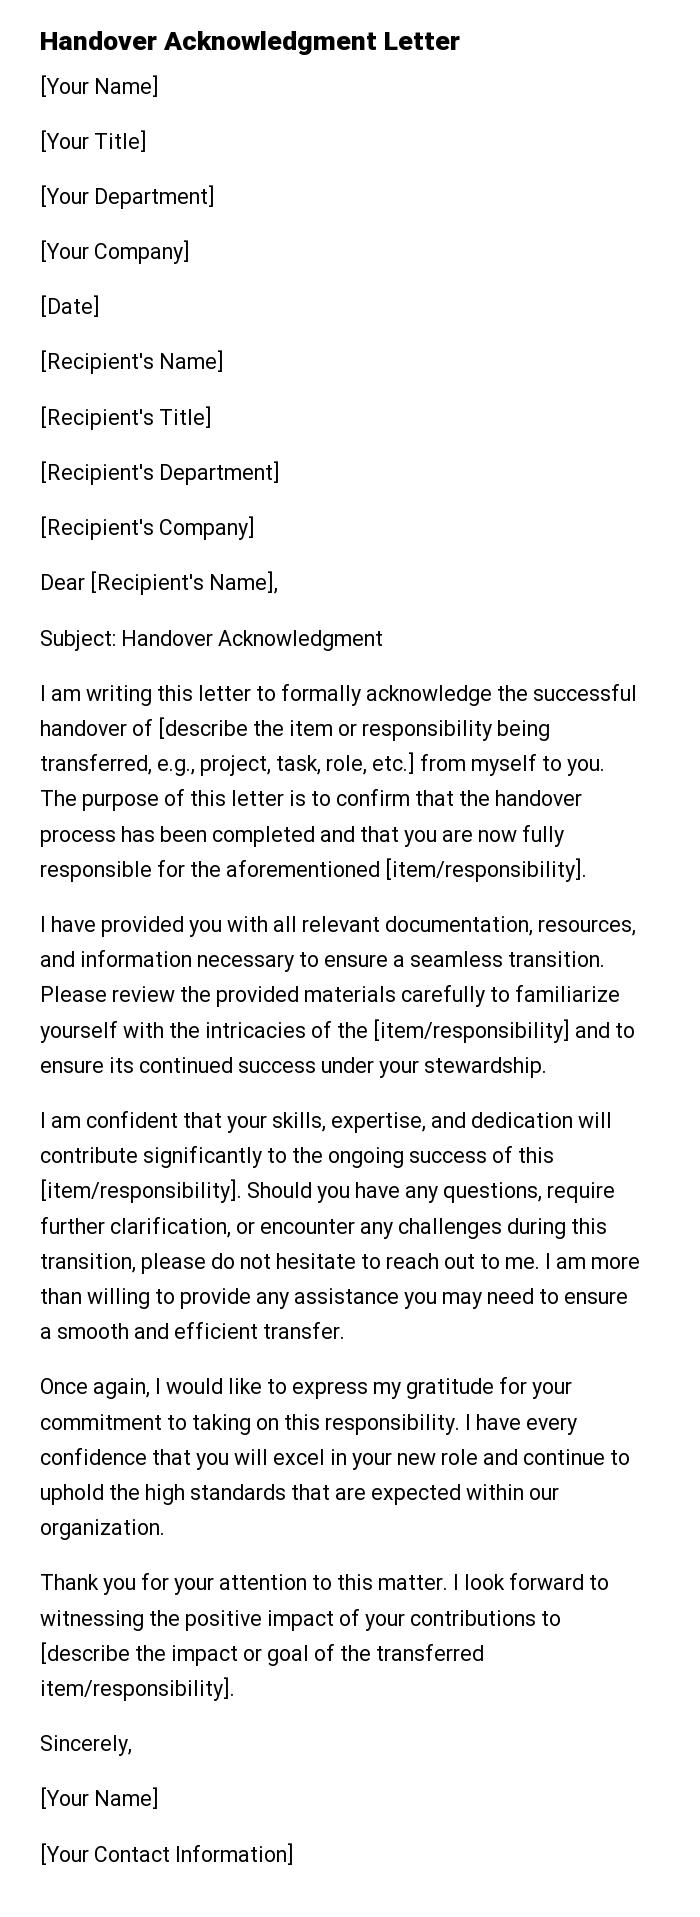 Handover Acknowledgment Letter